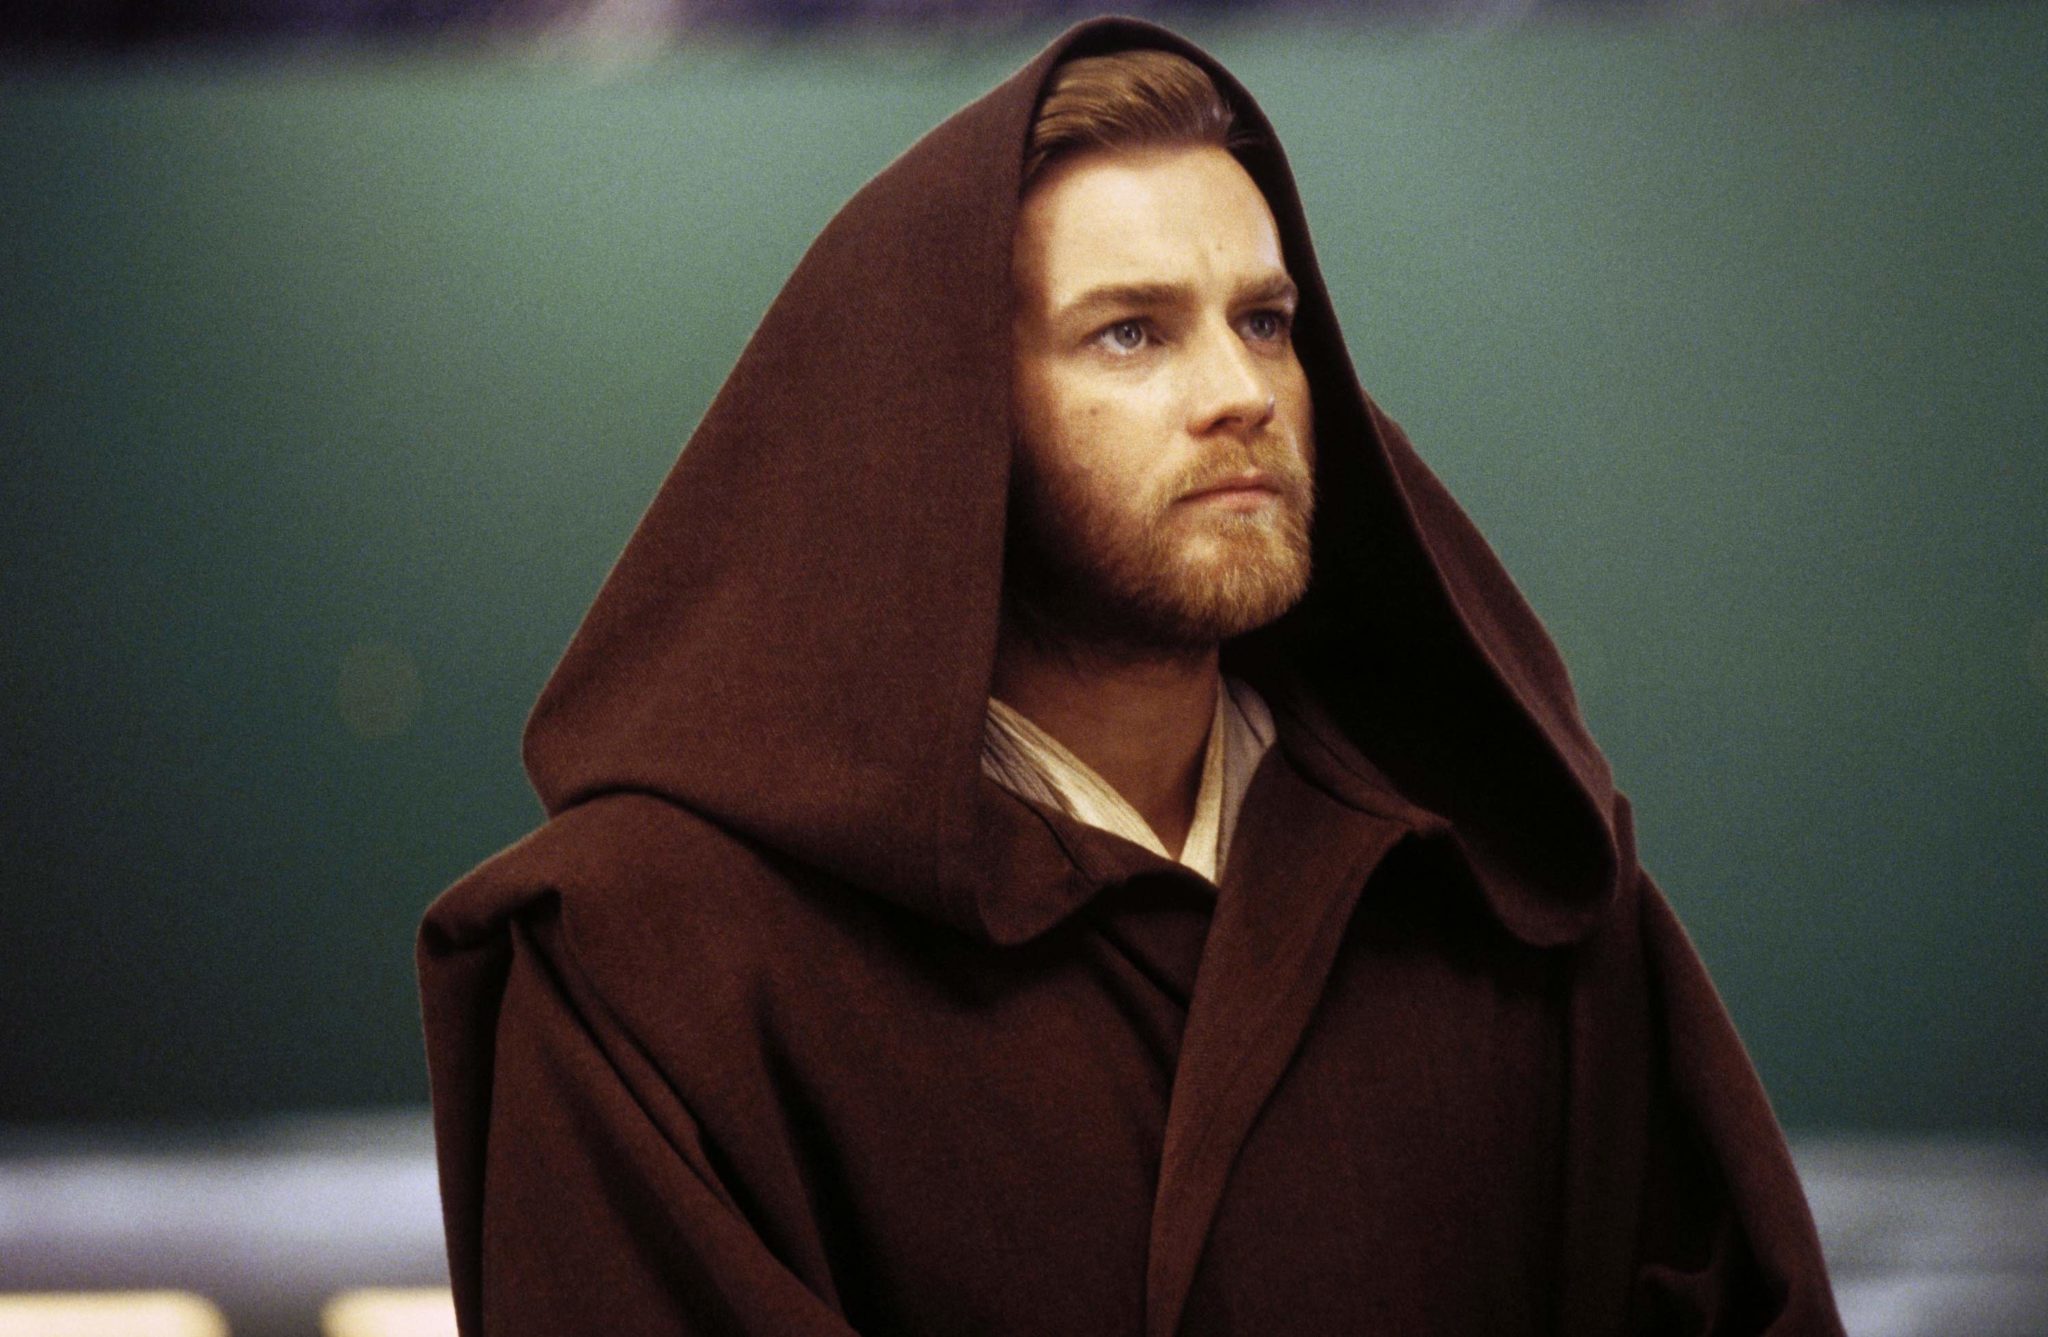 Disney+ Series "Obi-Wan Kenobi" Rounds Out Its Cast.